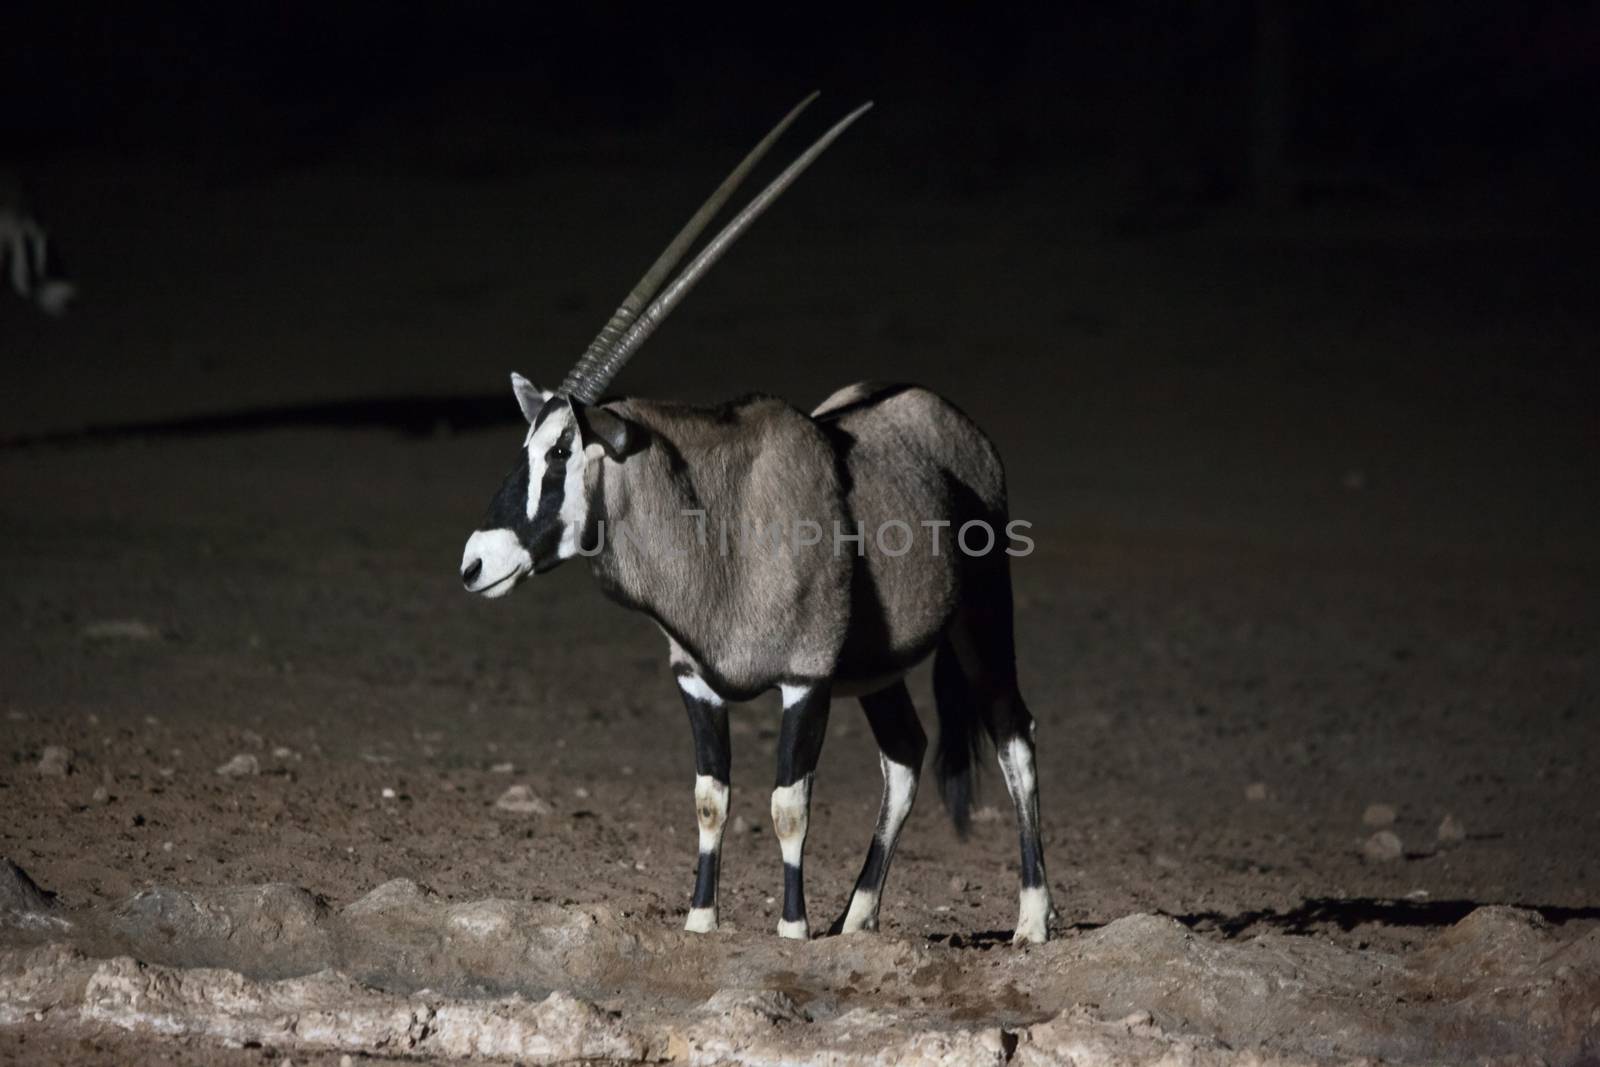 Monochrome Oryx (Oryx gazella) hotographed at nigt at a waterhole. Mata Mata restcamp, Kgalagadi Trans Frontier Park. South Africa.